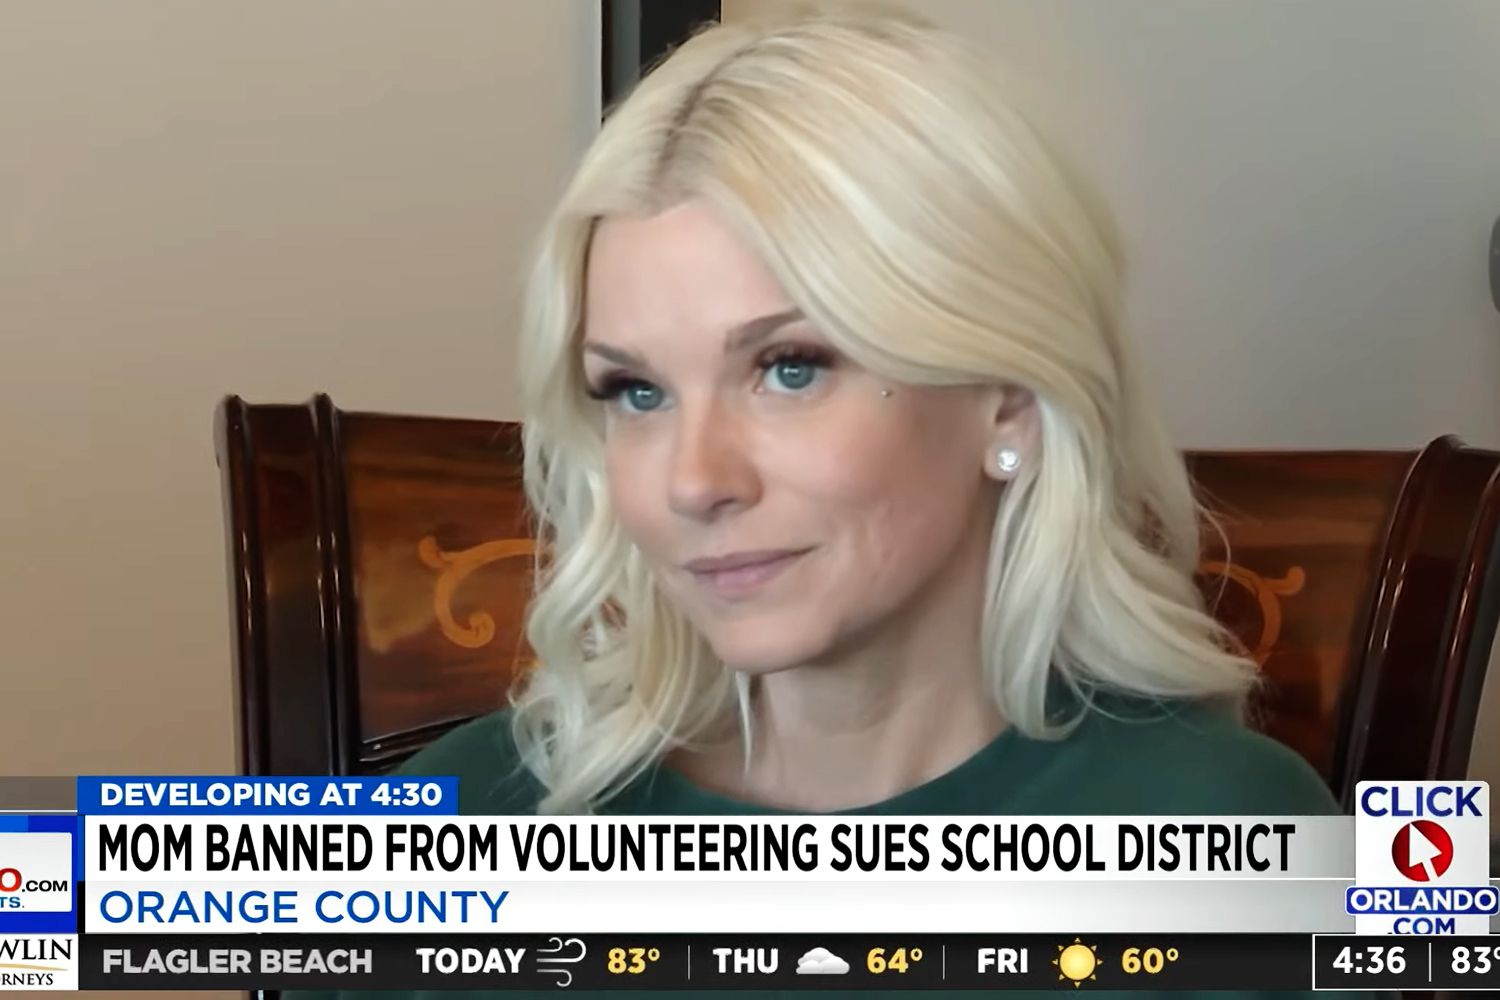 OnlyFansアカウントのために息子の学校から禁止されたとされるフロリダ州の2人の母親が訴訟を起こす